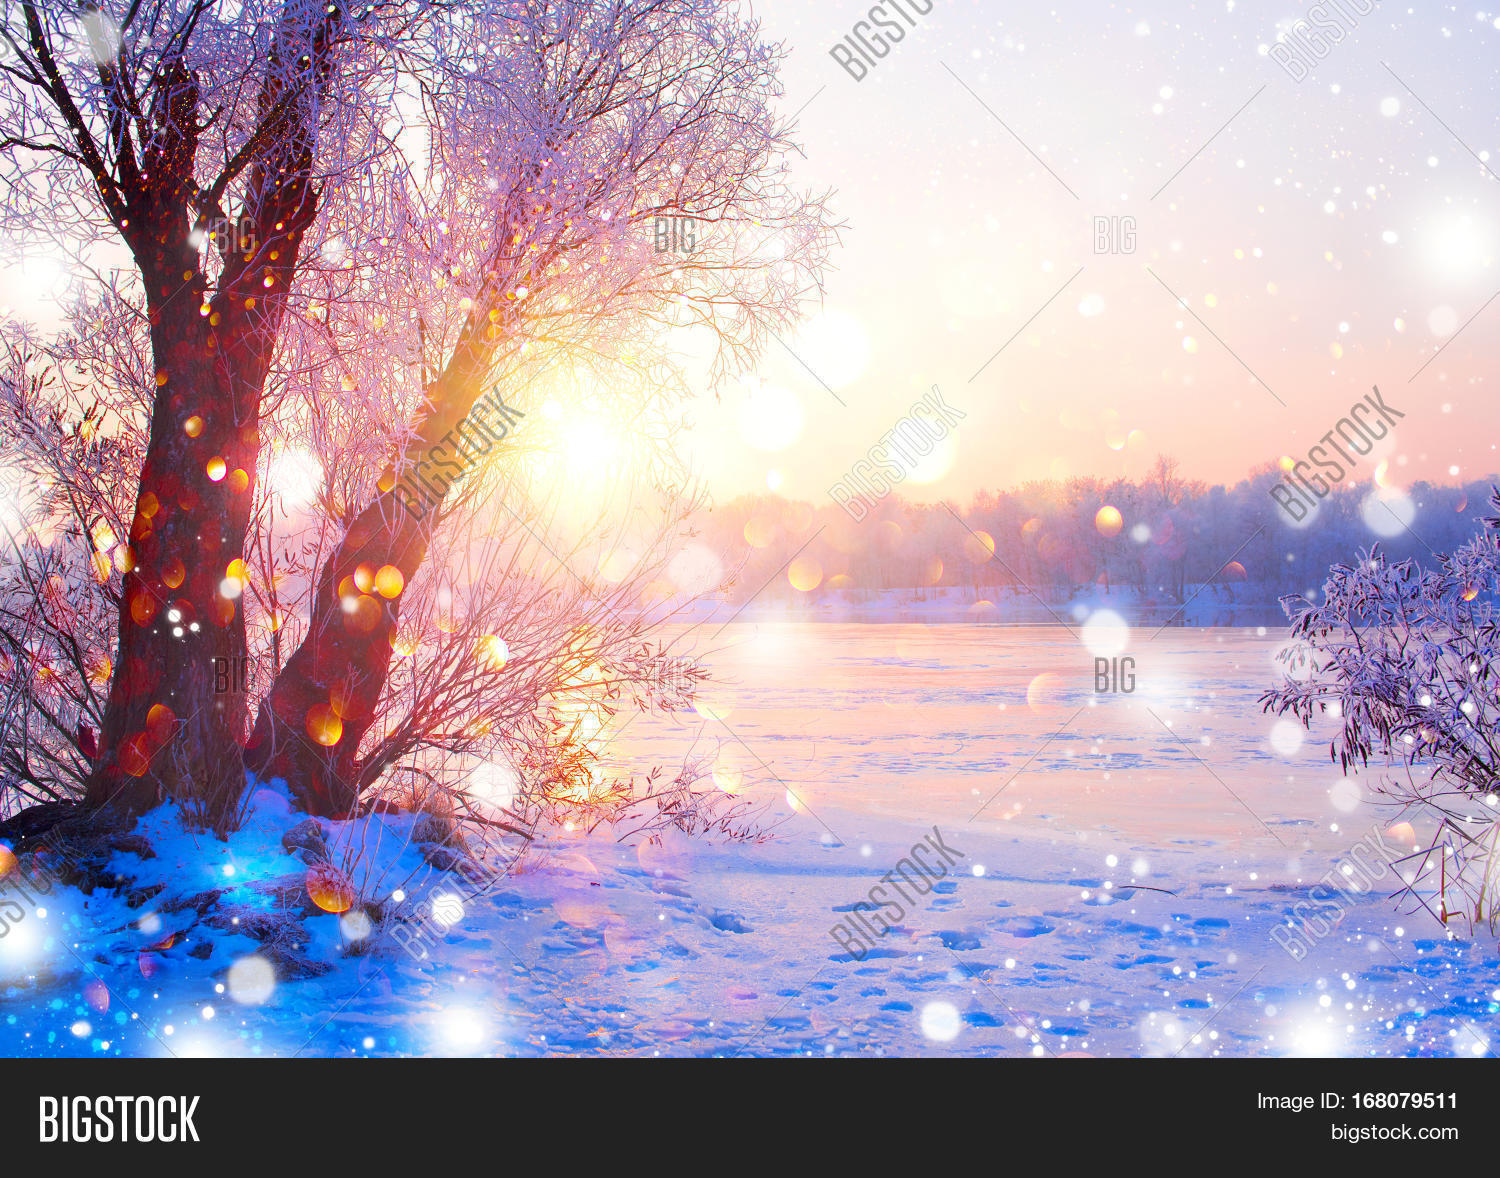 Beautiful Winter Image Photo Trial Bigstock